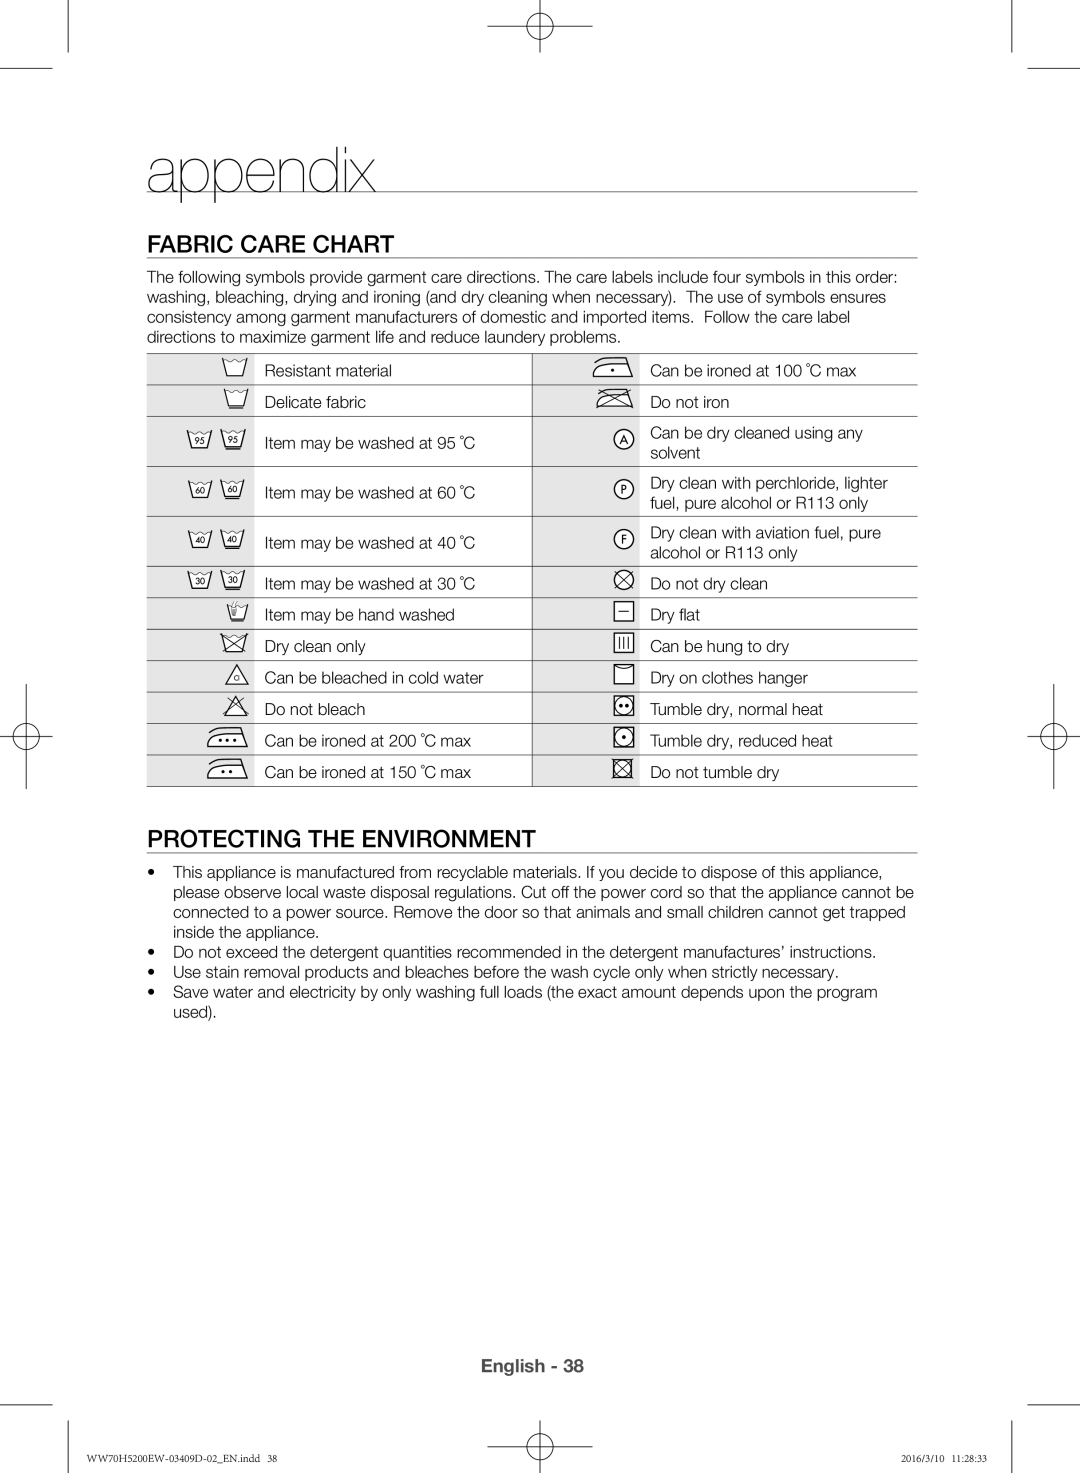 Samsung WW70H5200EW/KJ manual Appendix, Fabric care chart, Protecting the environment 